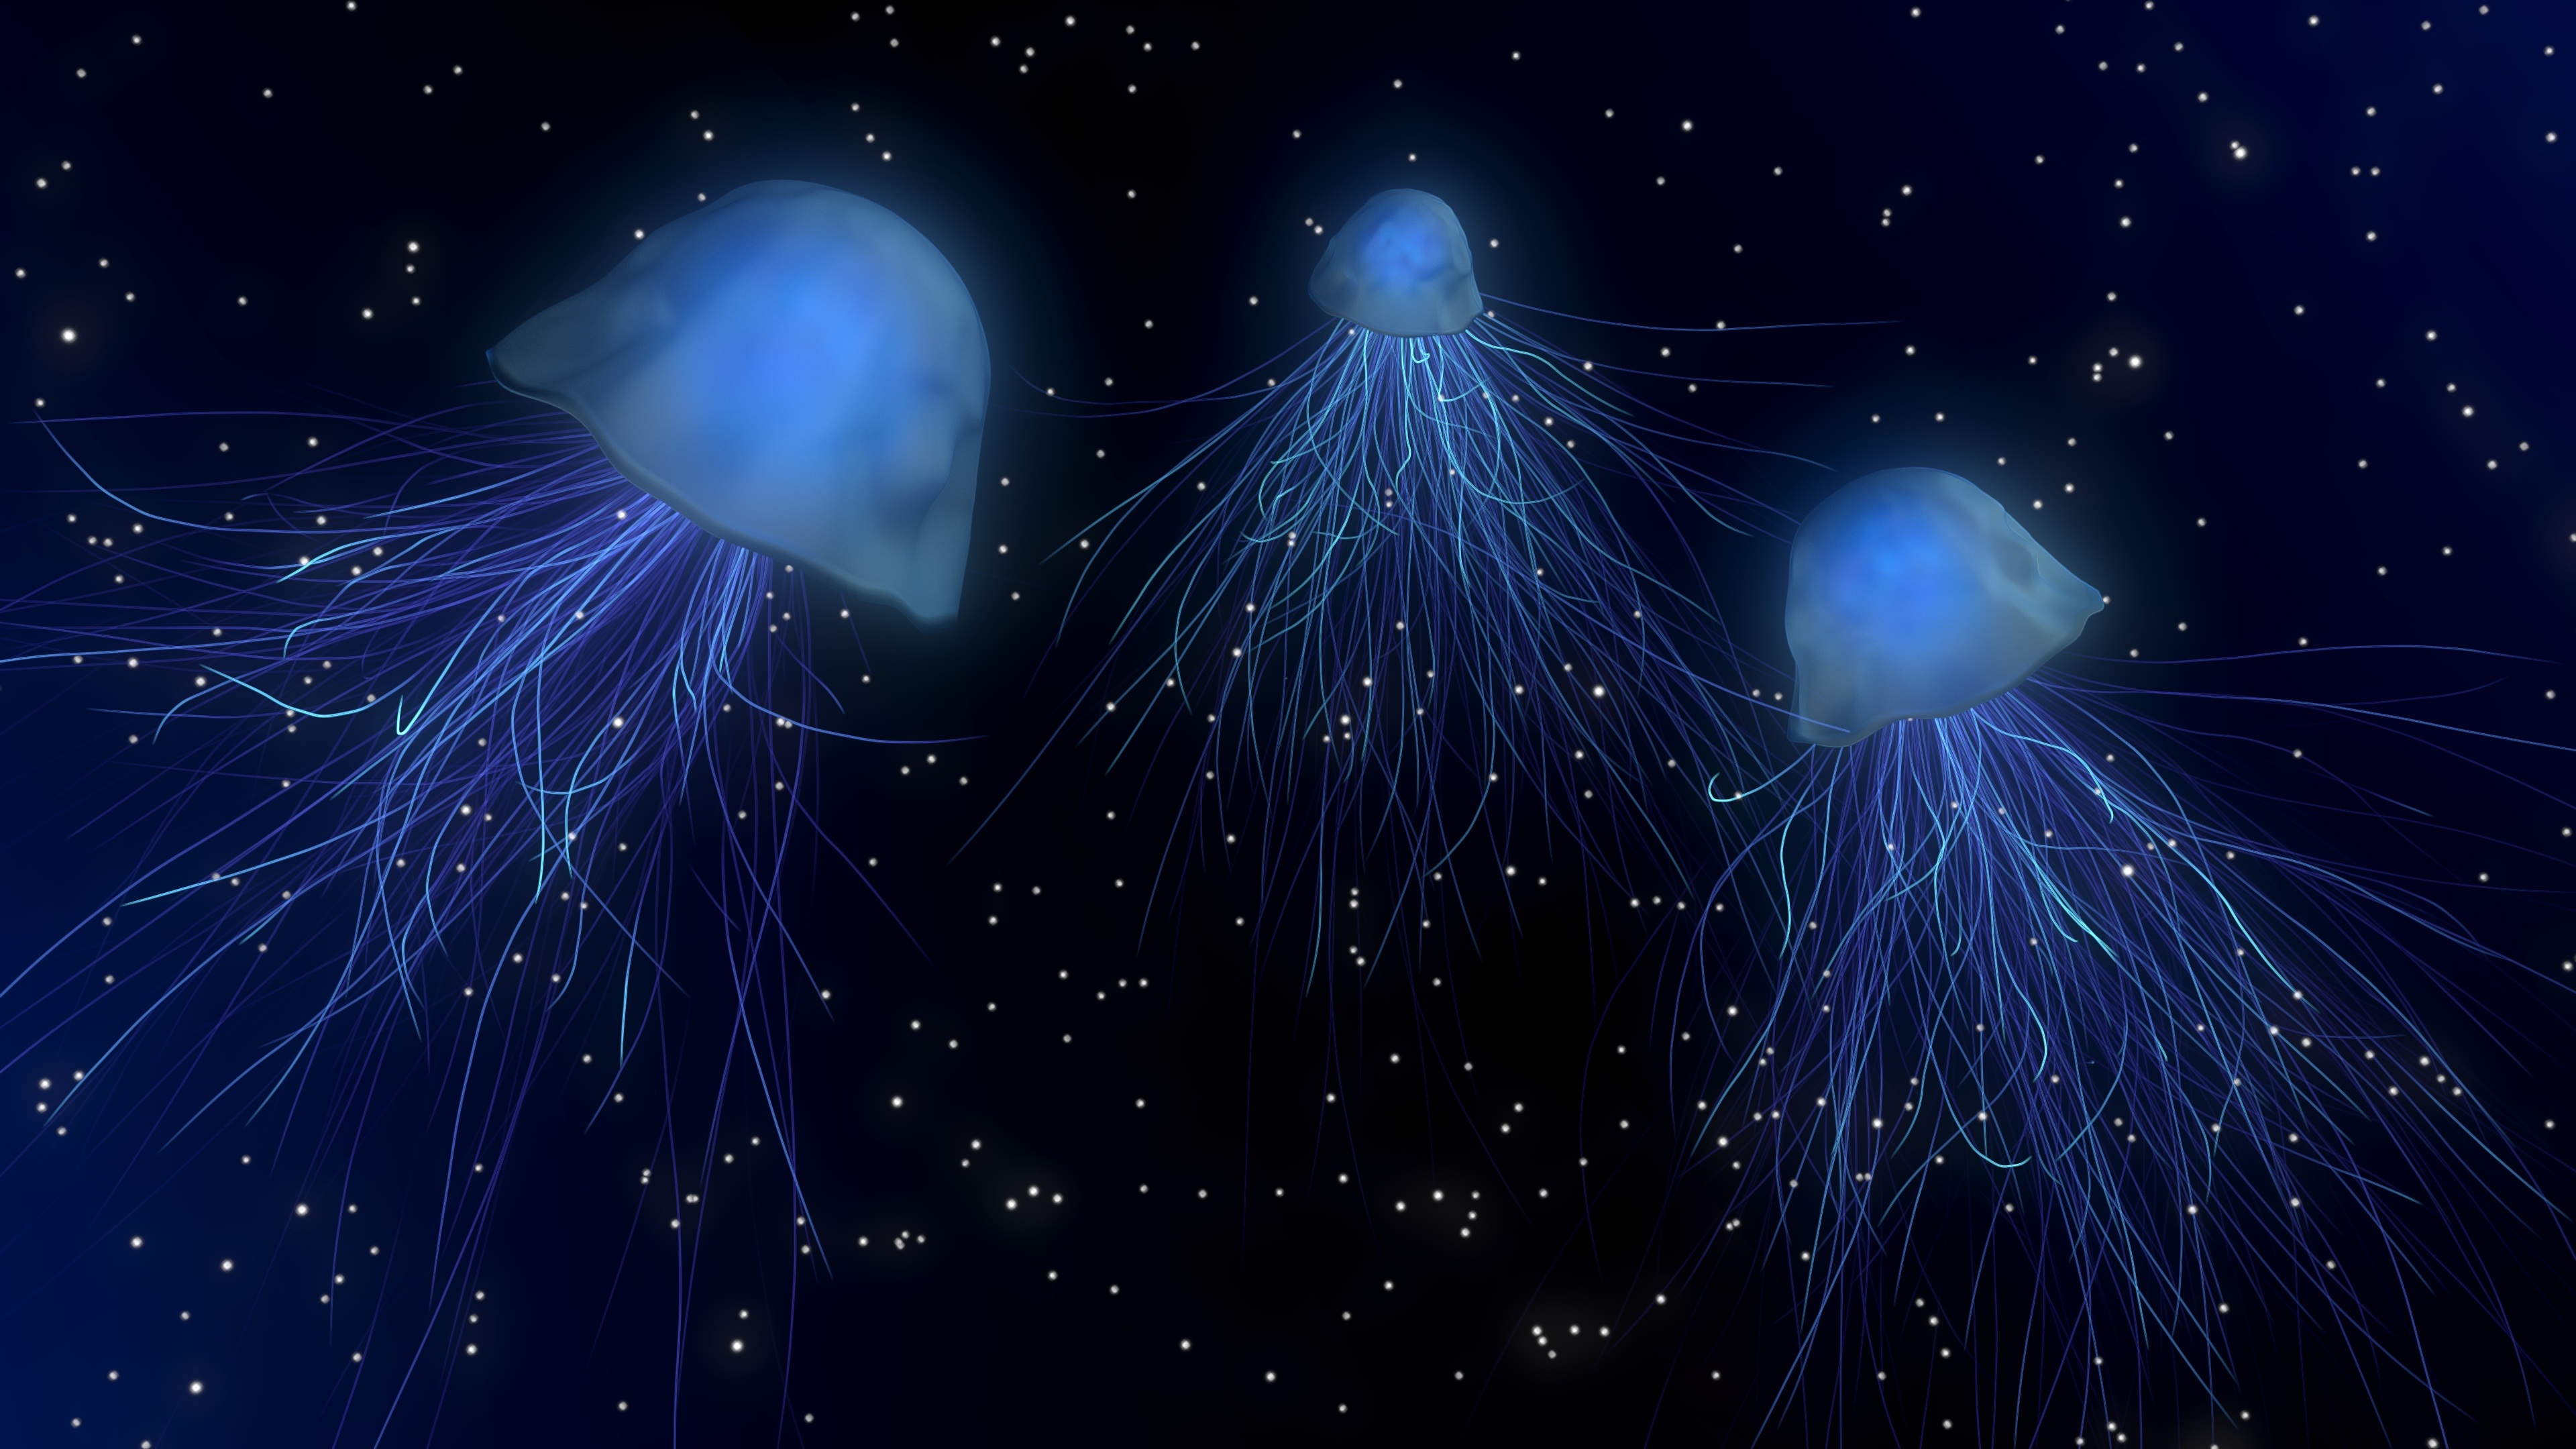 Download wallpaper 1920x1080 jellyfish art underwater world tentacles  algae full hd hdtv fhd 1080p hd background